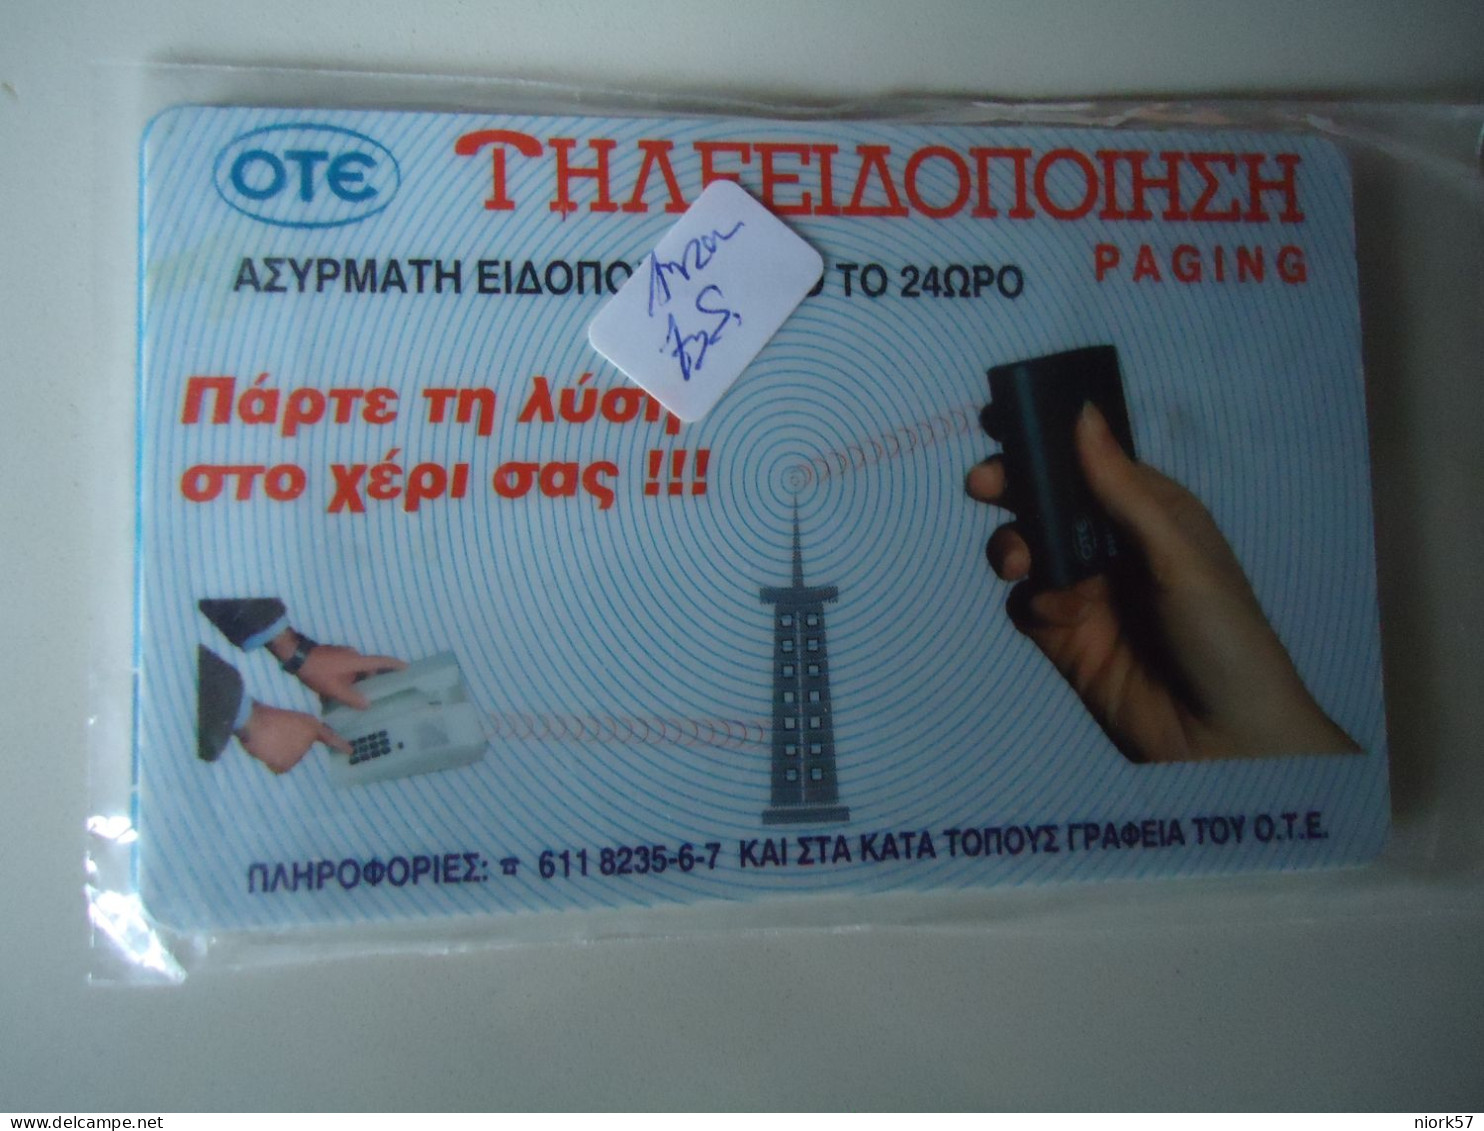 GREECE  USED CARDS 1994 O119   XORIS GRAMMH WITHOUT LINE - Telecom Operators